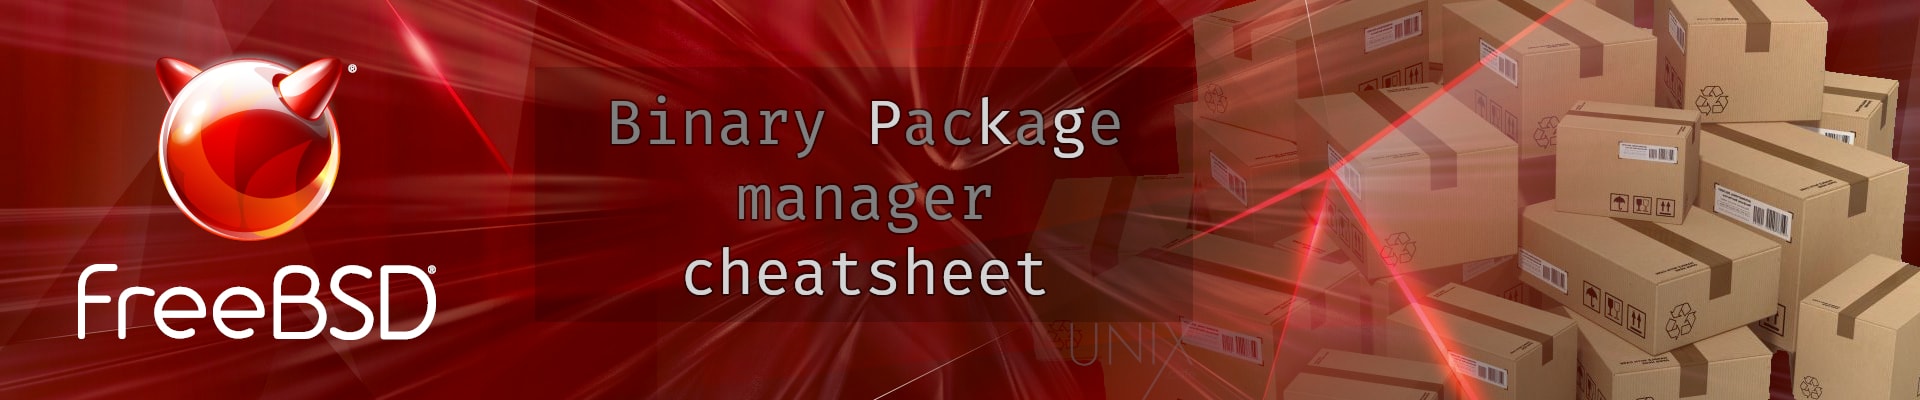 FreeBSD binary package manager cheatsheet